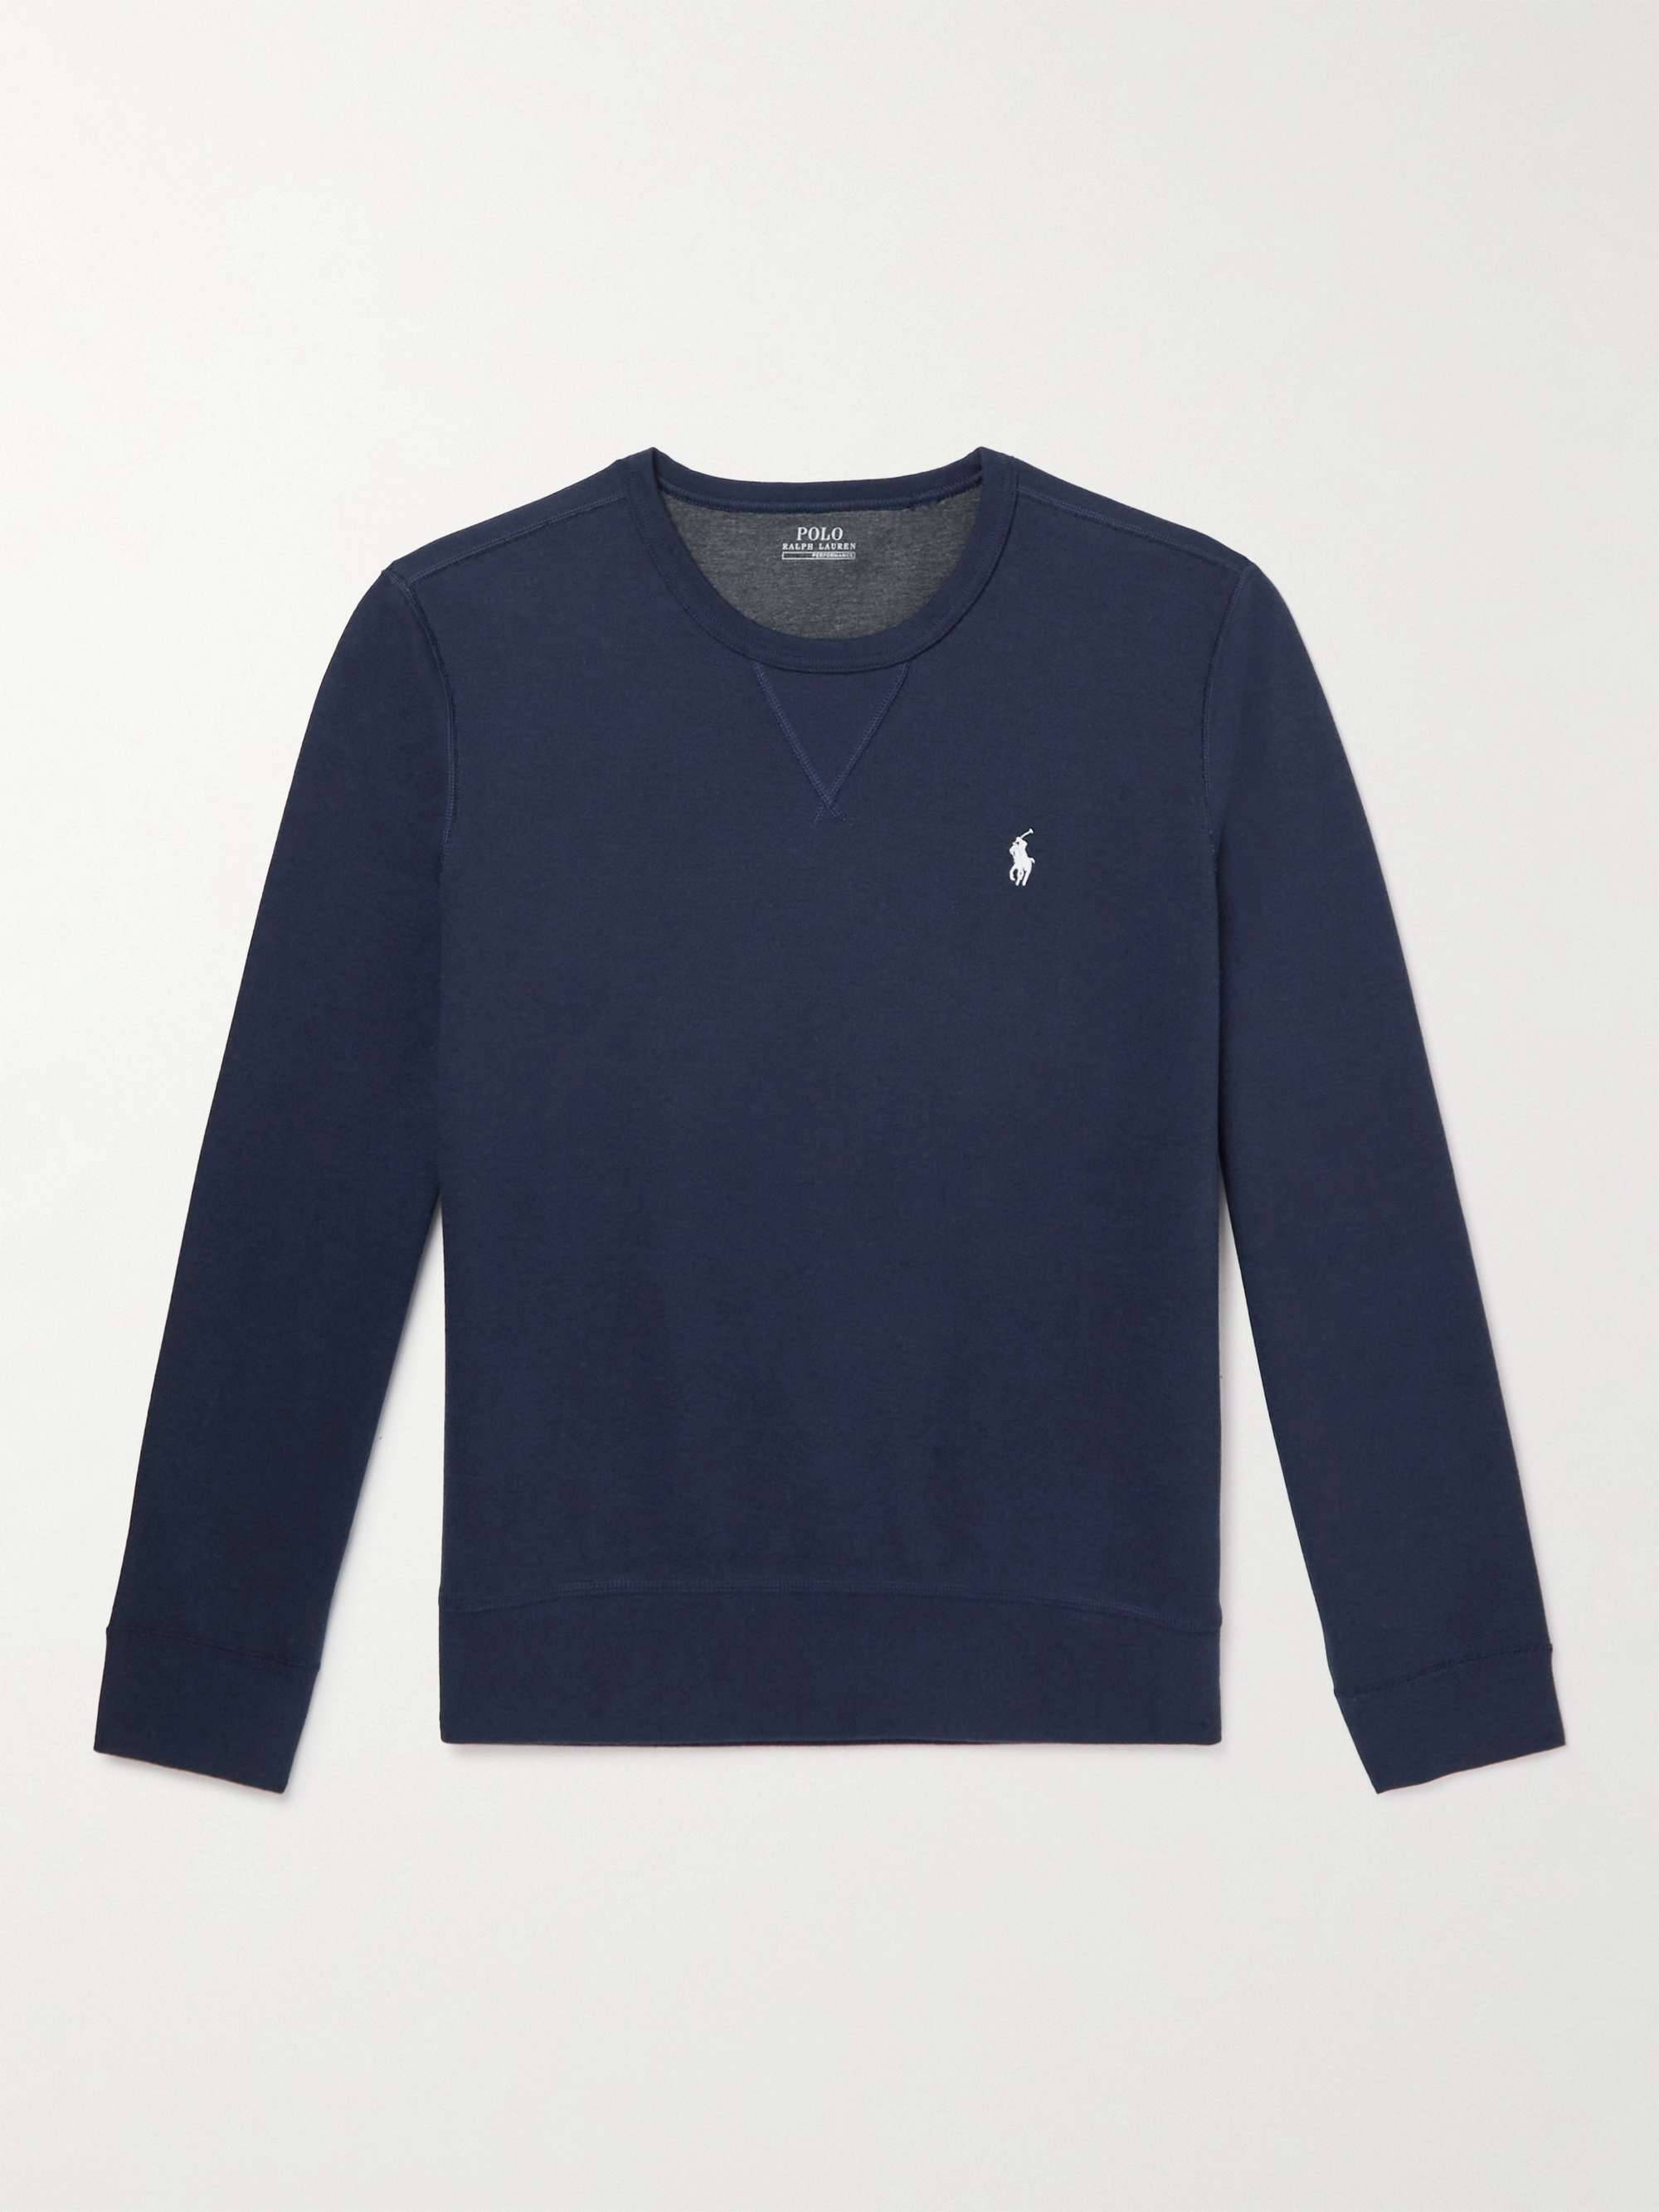 Navy Logo-Embroidered Jersey Sweatshirt | POLO RALPH LAUREN | MR PORTER